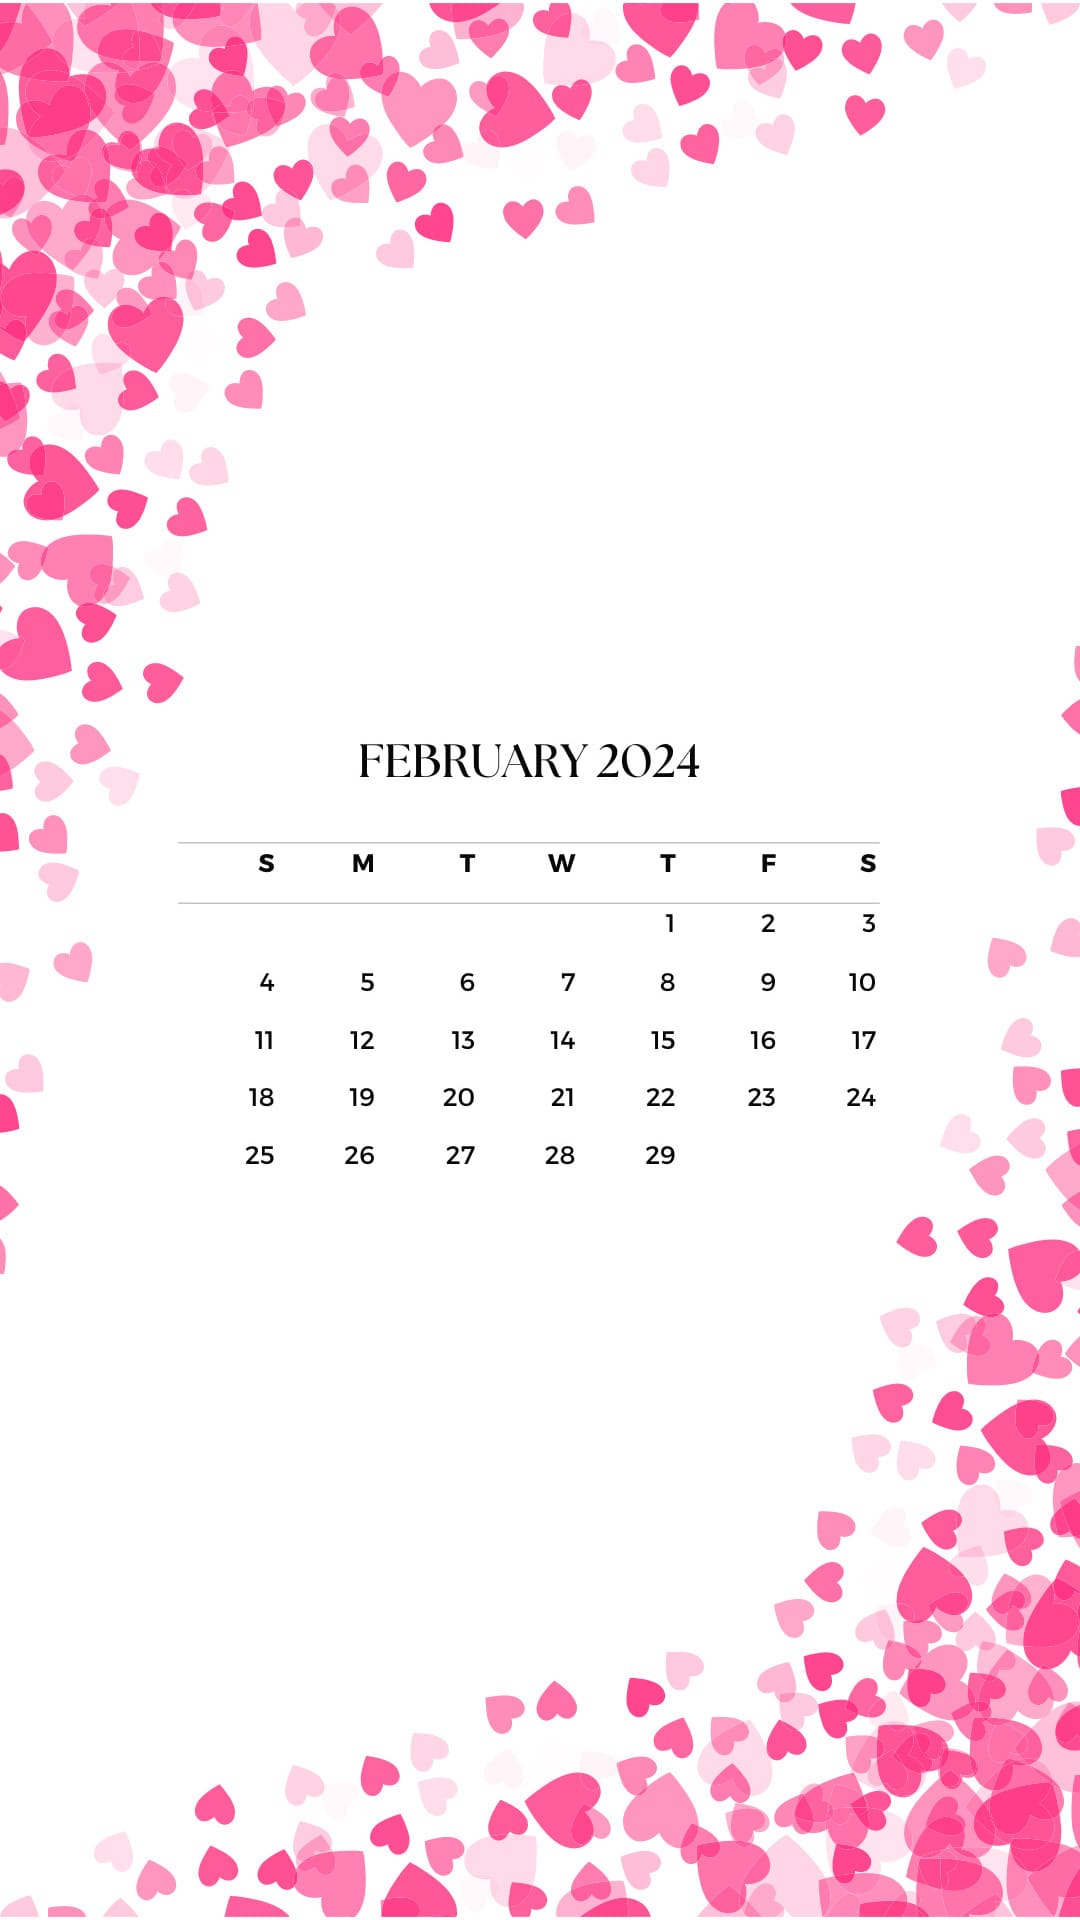 February 2024 Calendar Wallpapers